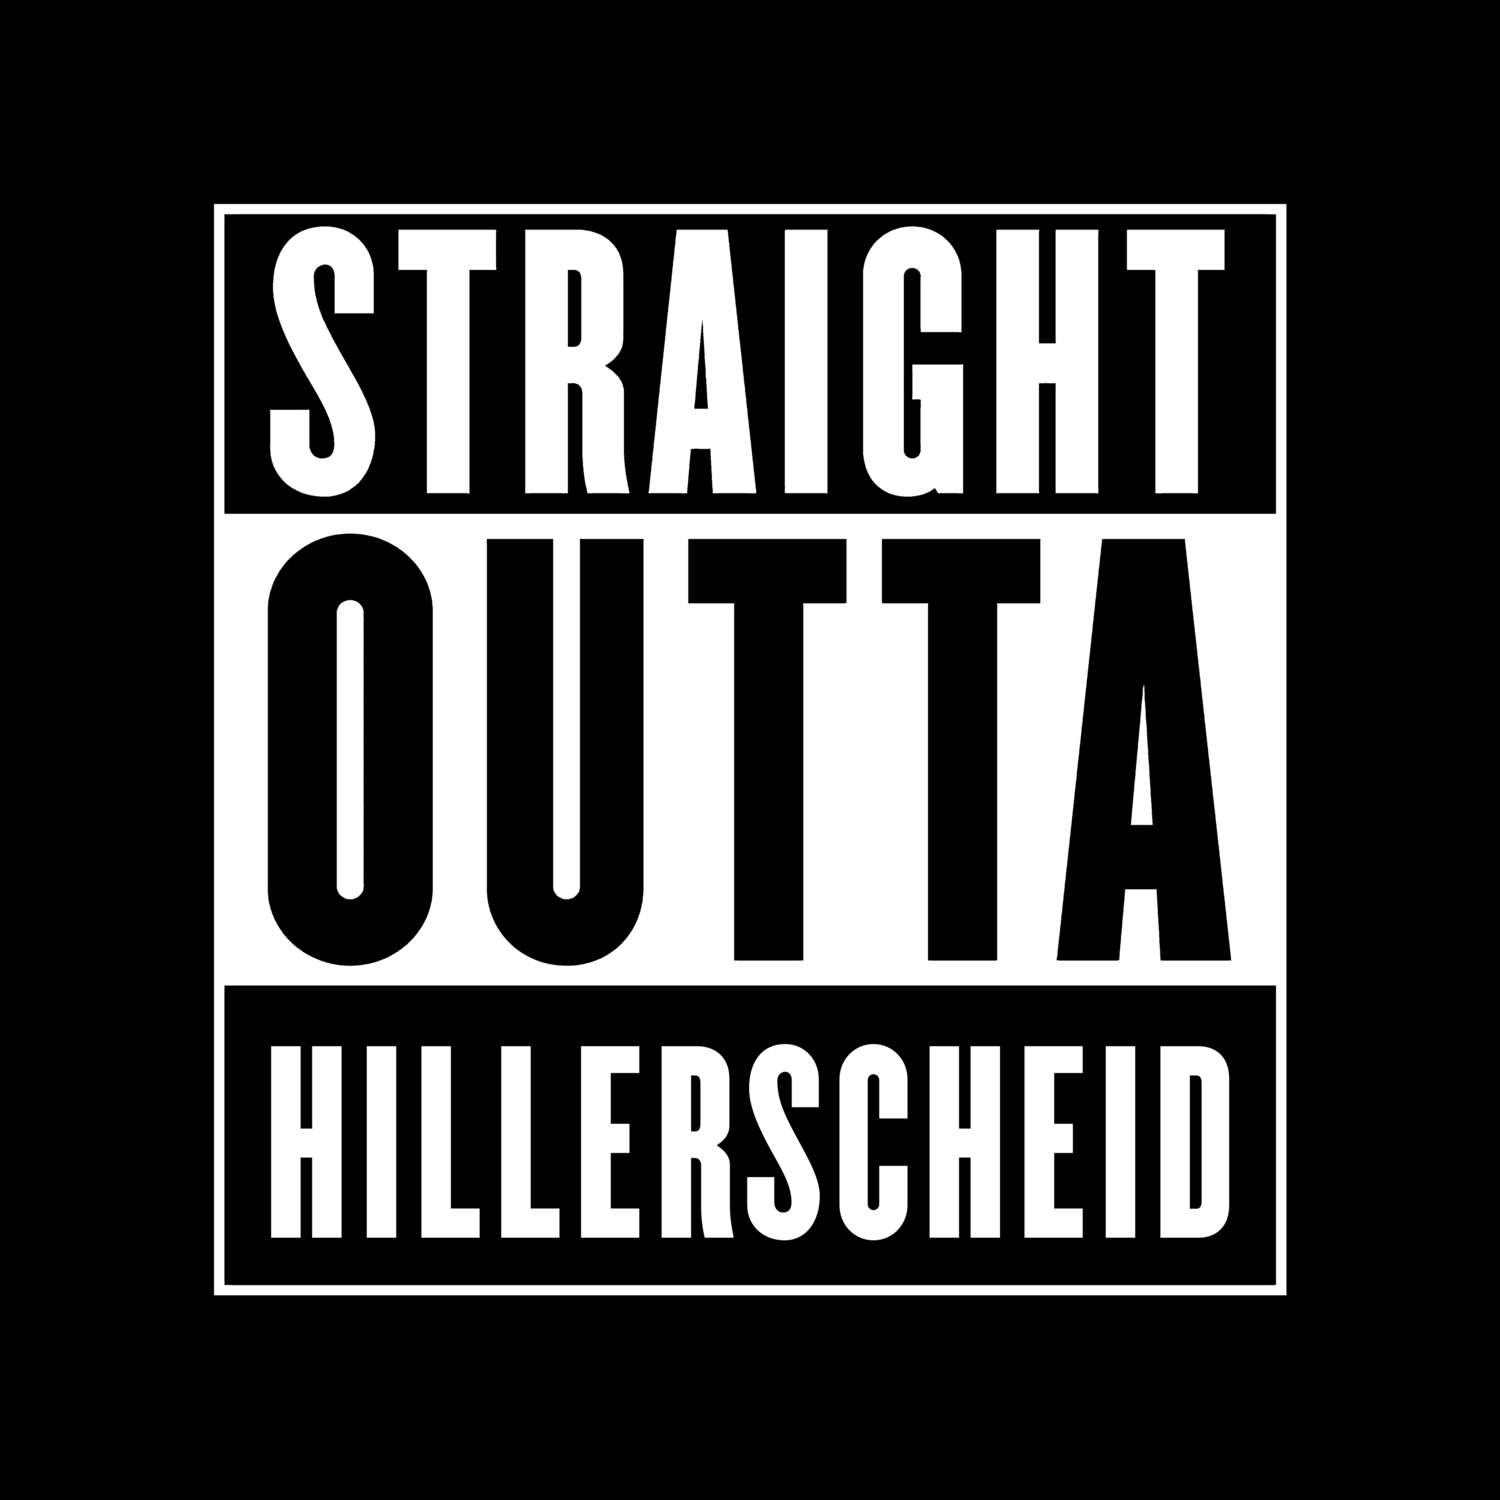 Hillerscheid T-Shirt »Straight Outta«